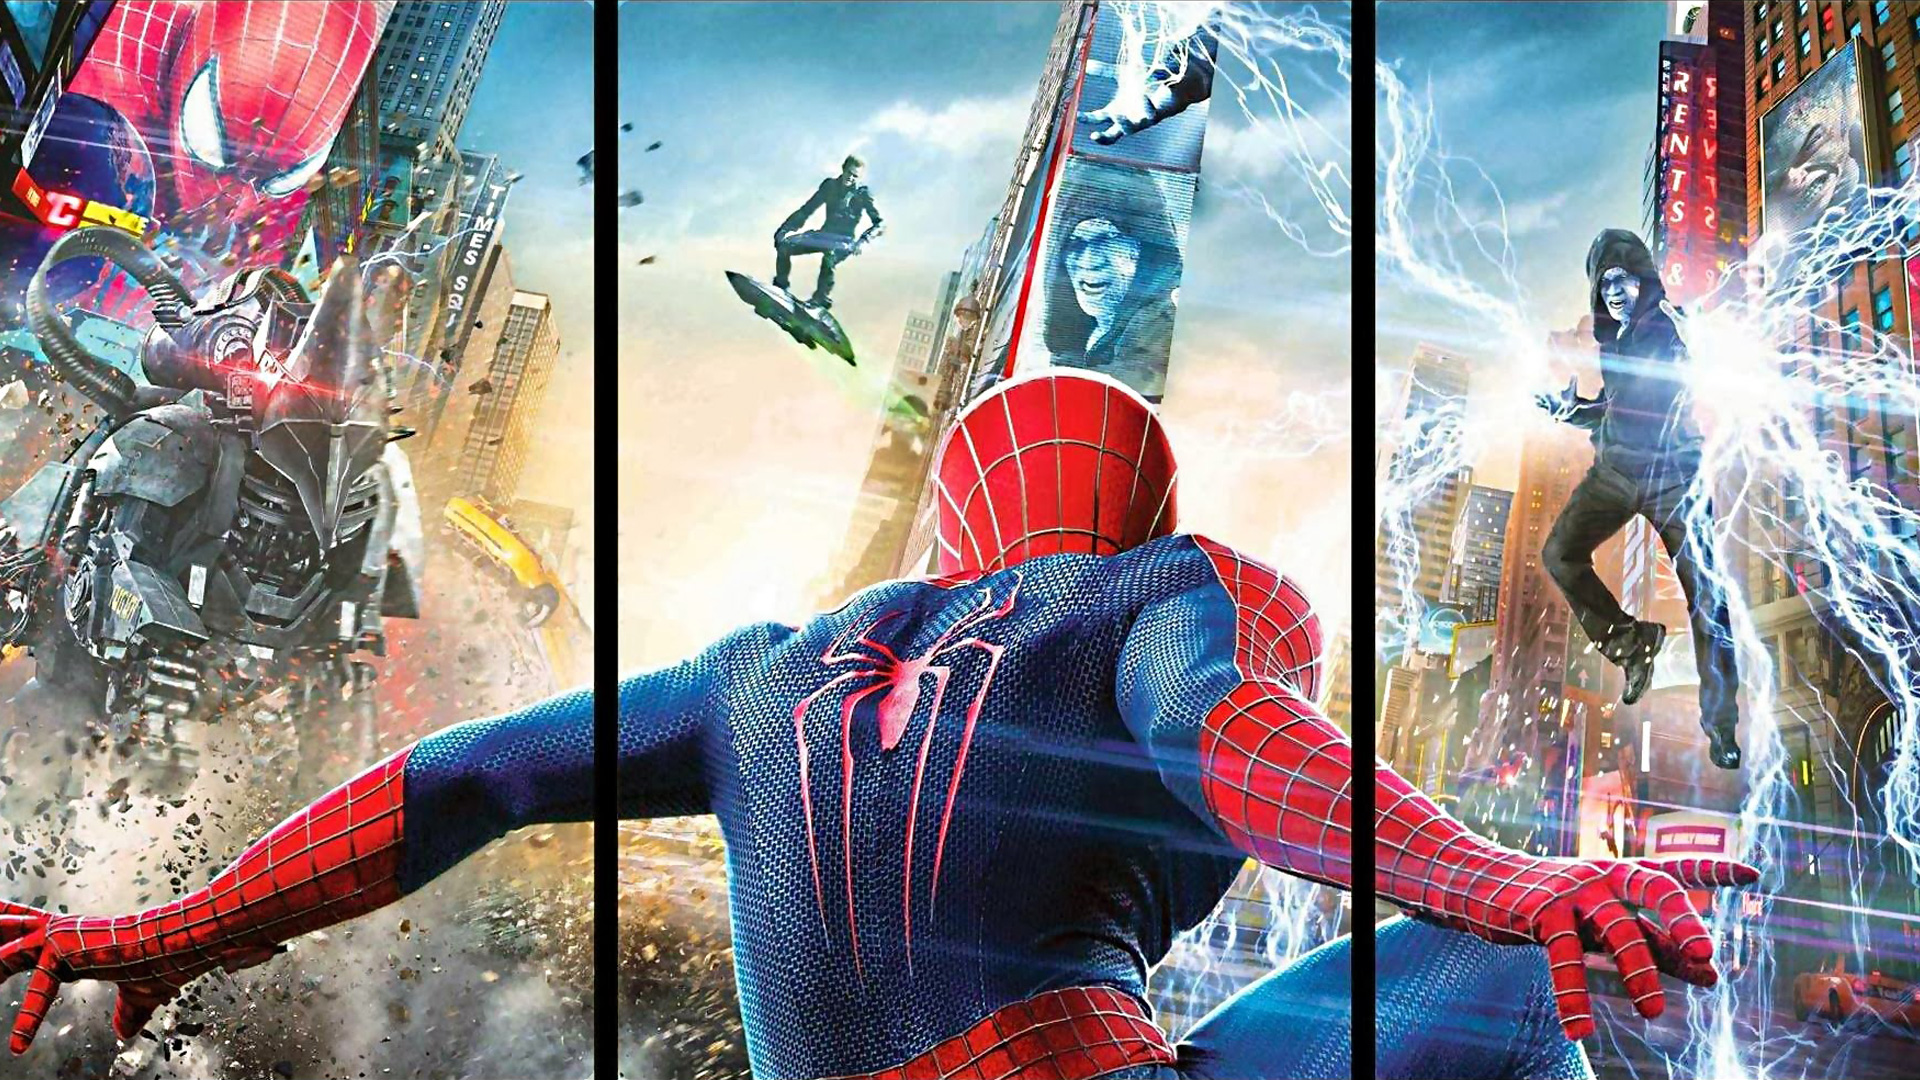 Spiderman Wallpaper HD Free Download | New HD Wallpapers Download